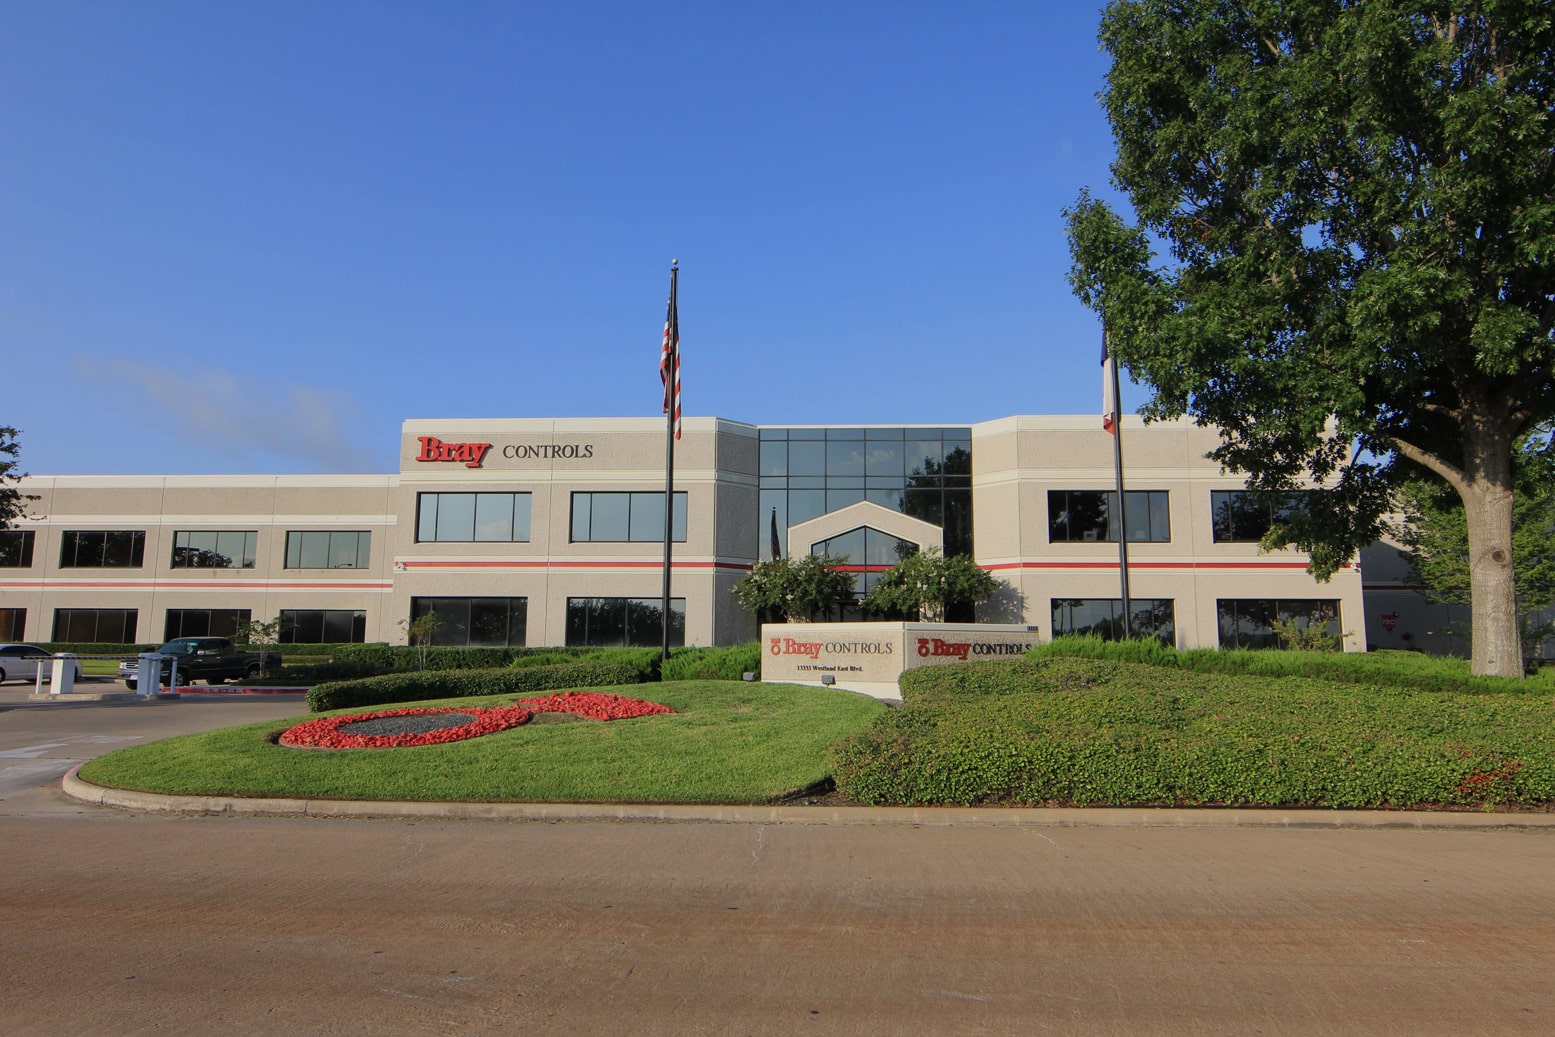 Fachada da sede da Bray Controls - Bray International em Houston